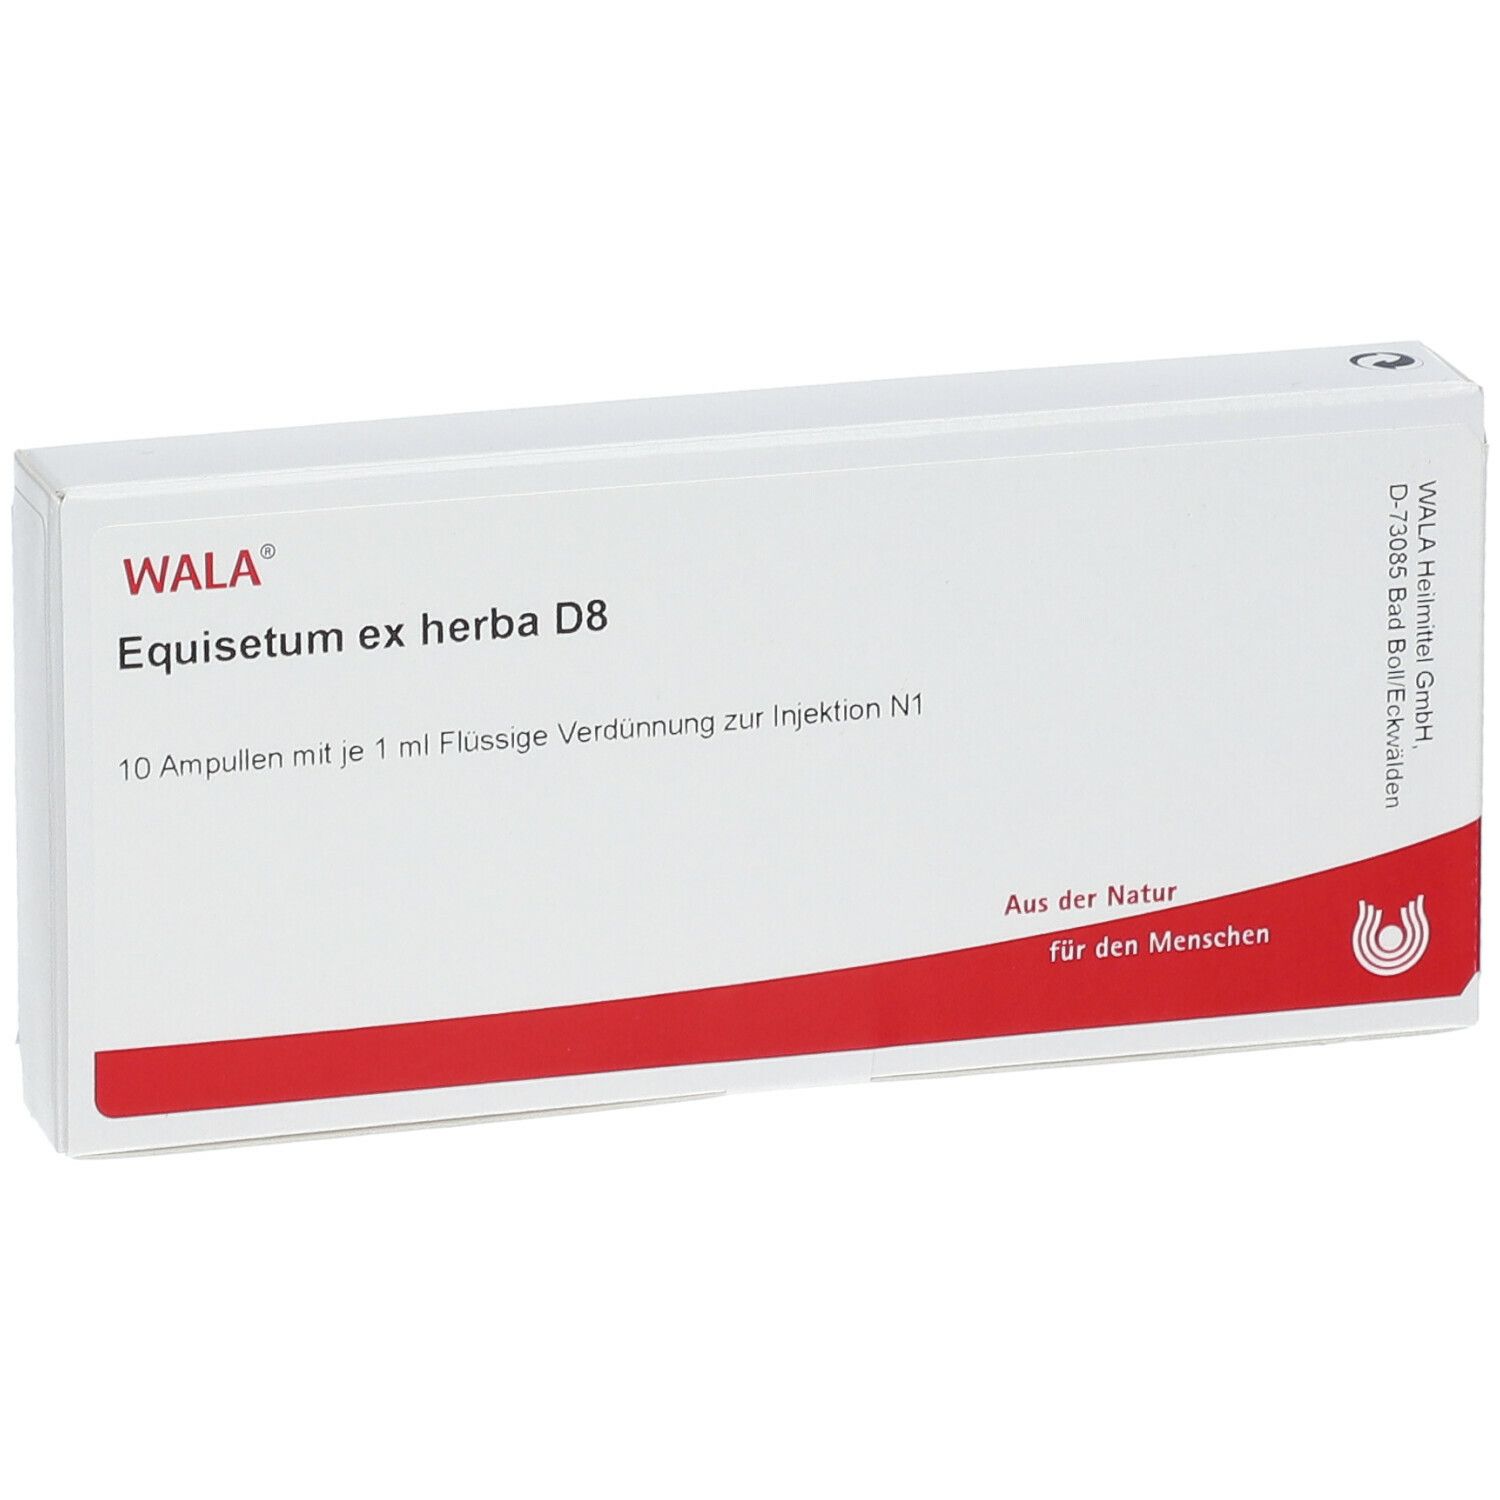 WALA® Equisetum ex herba D 8